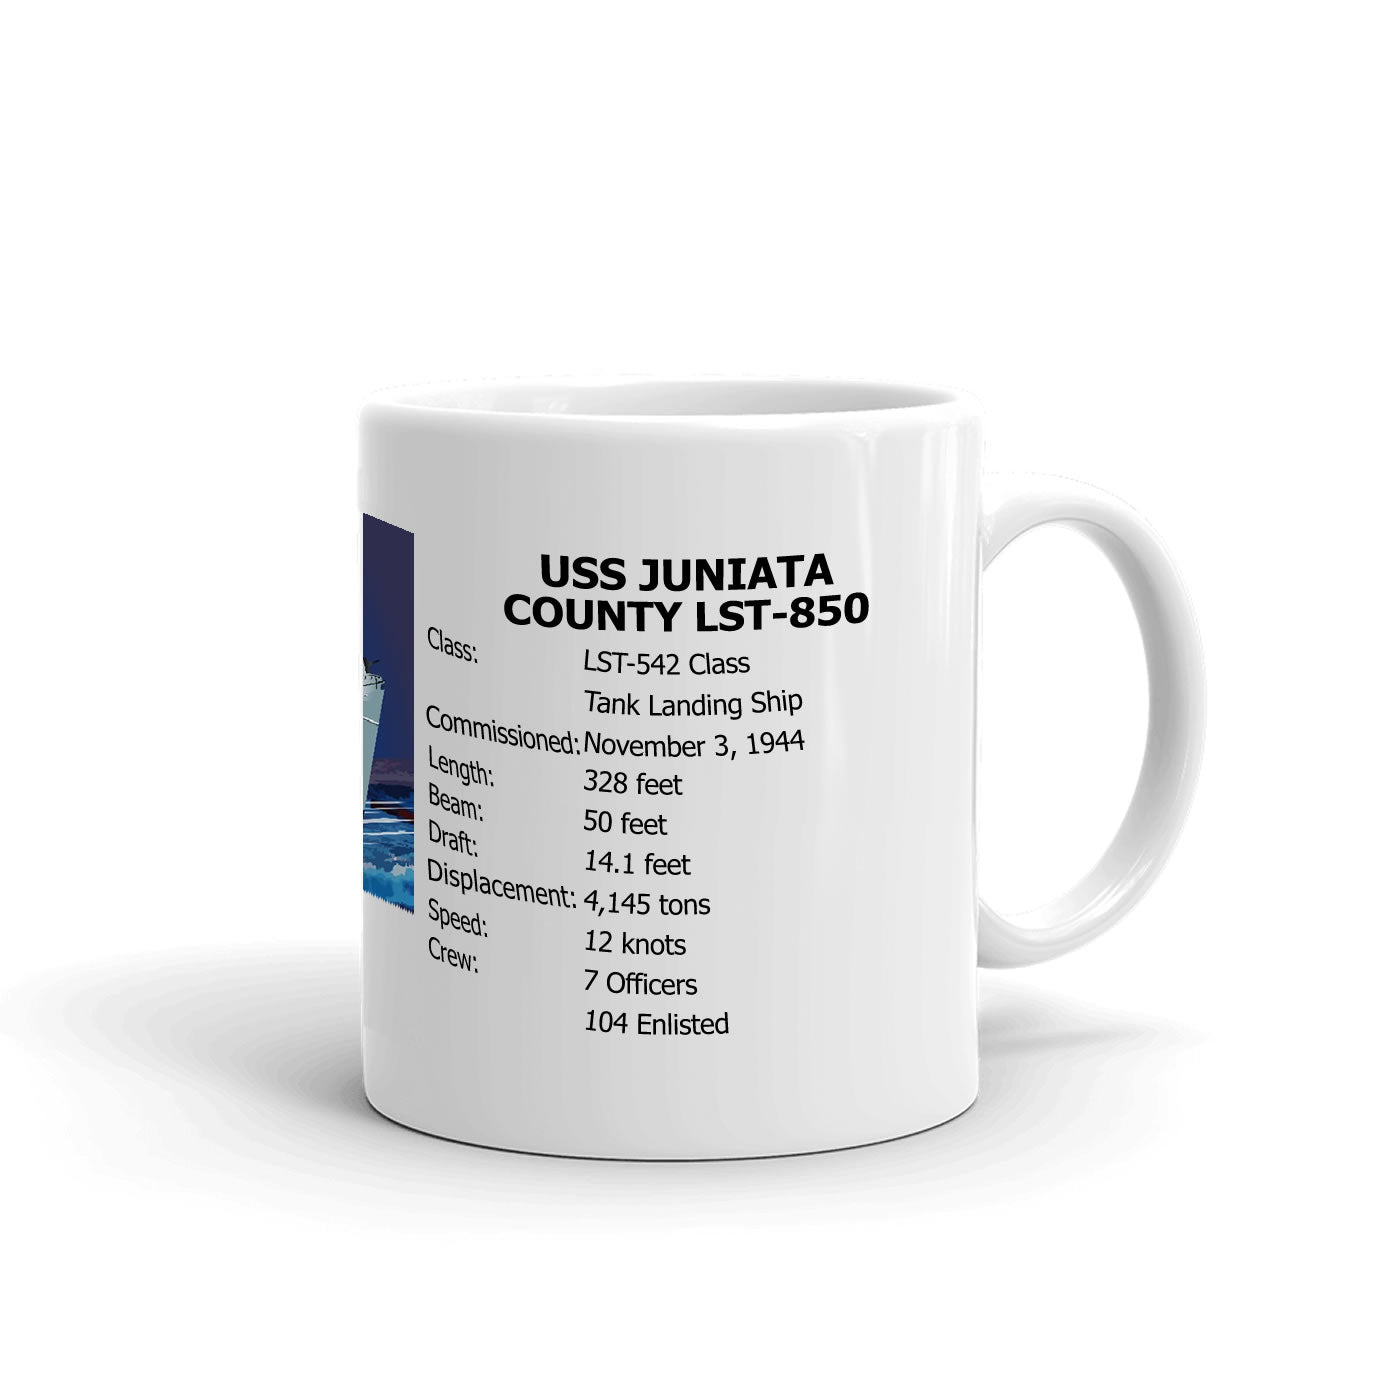 USS Juniata County LST-850 Coffee Cup Mug Right Handle